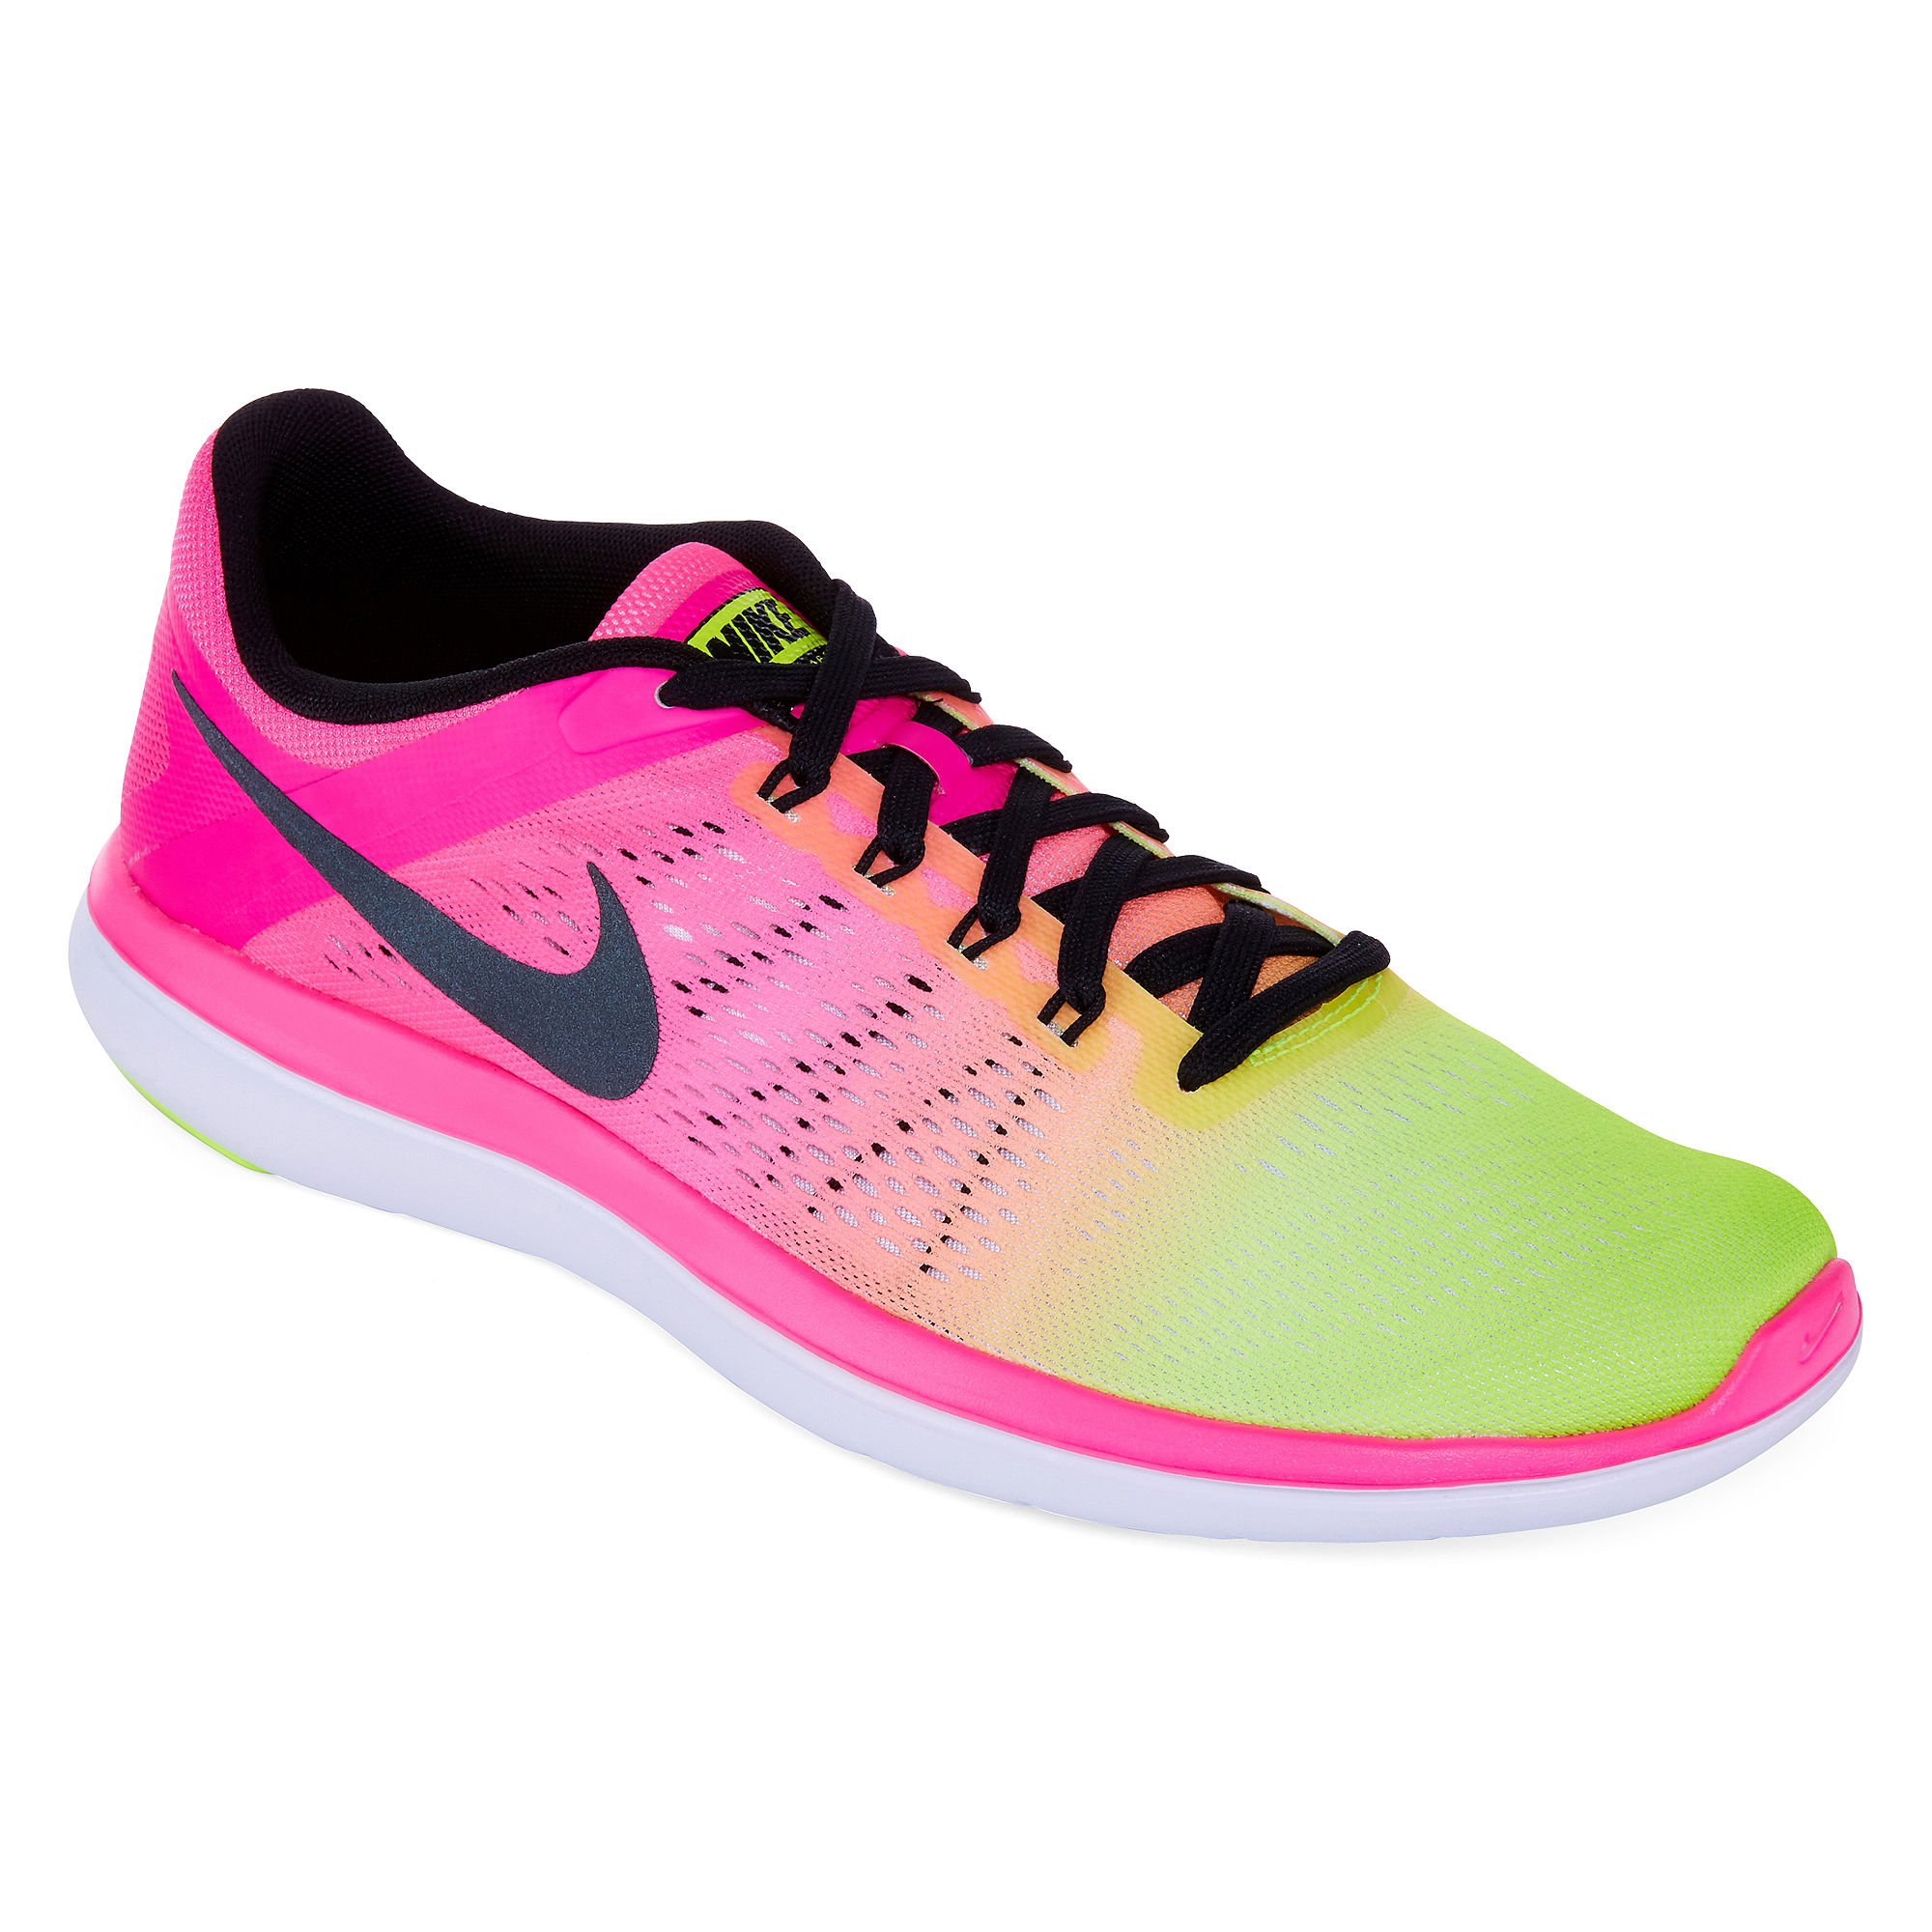 UPC 640135729157 product image for Nike Mens Flex Run 2016 Running Shoes | upcitemdb.com